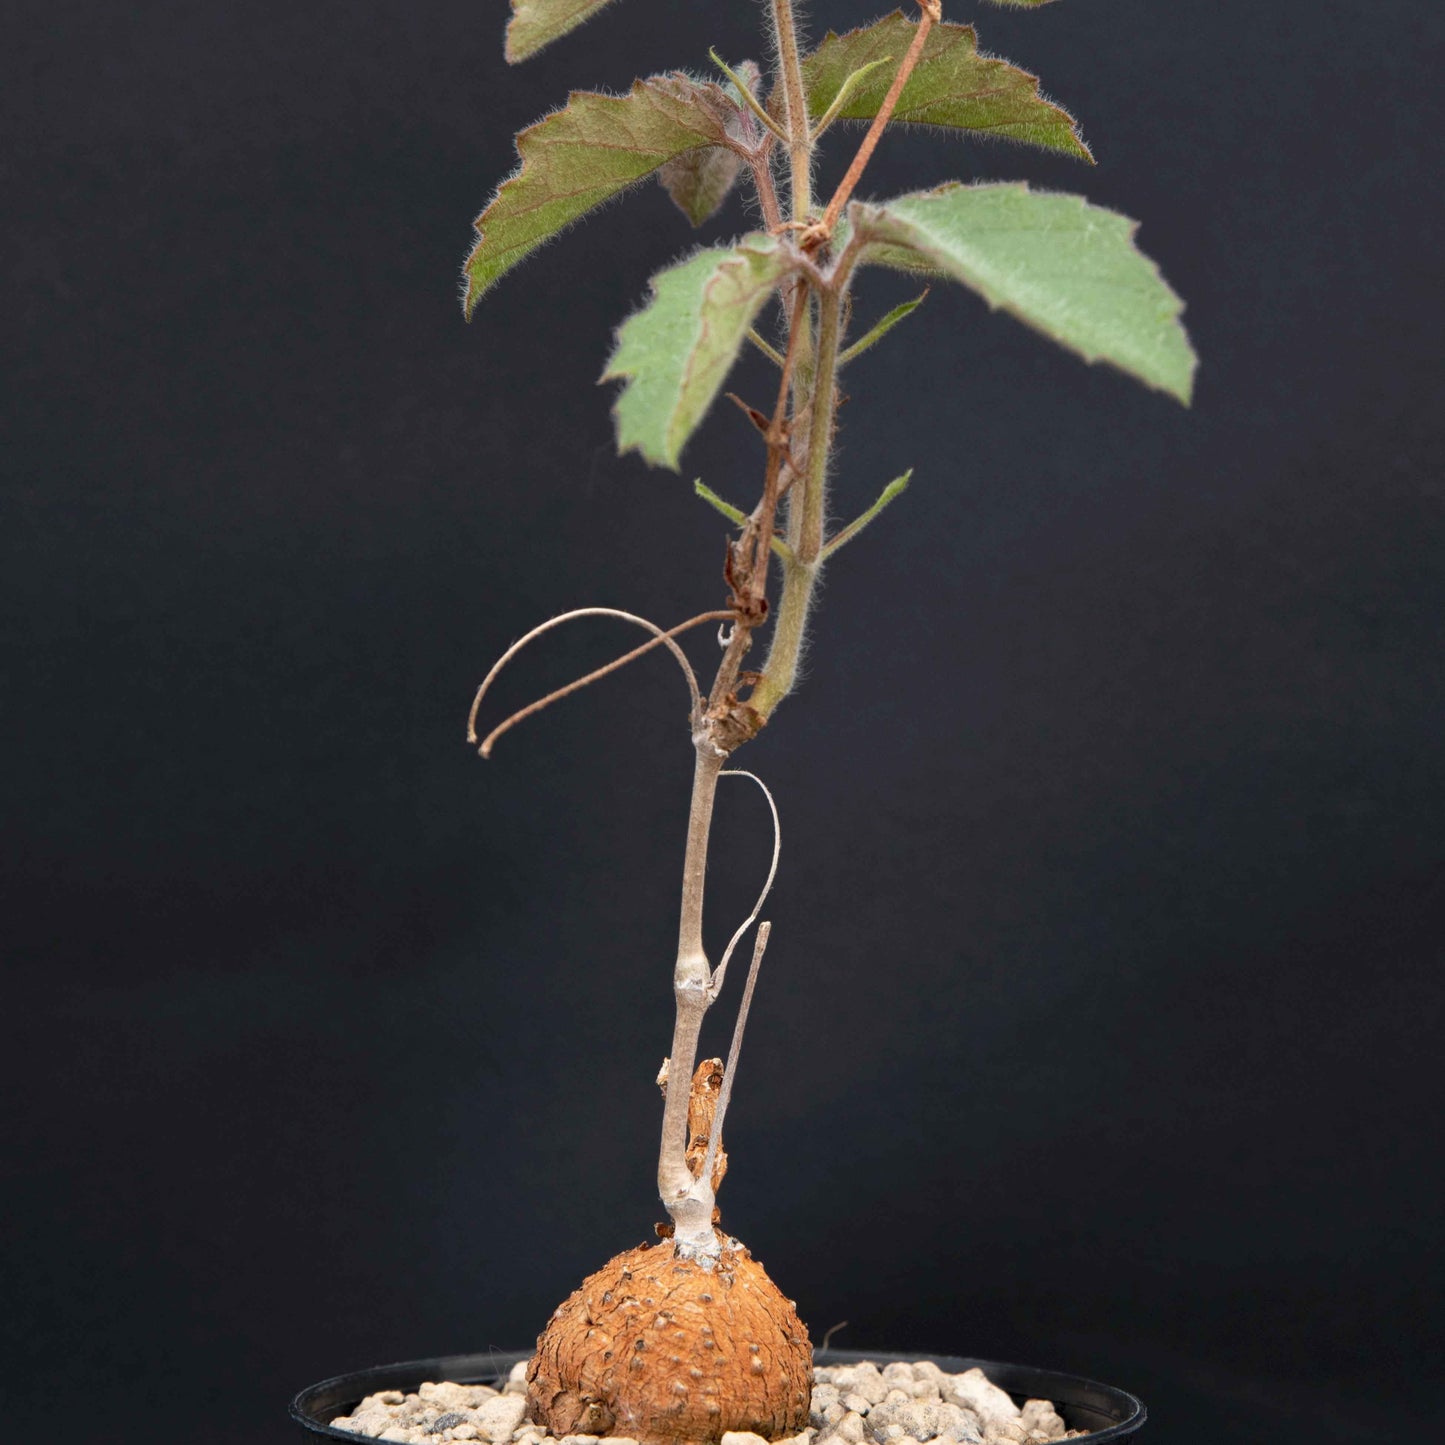 Cyphostemma adenocaule, bar root plant